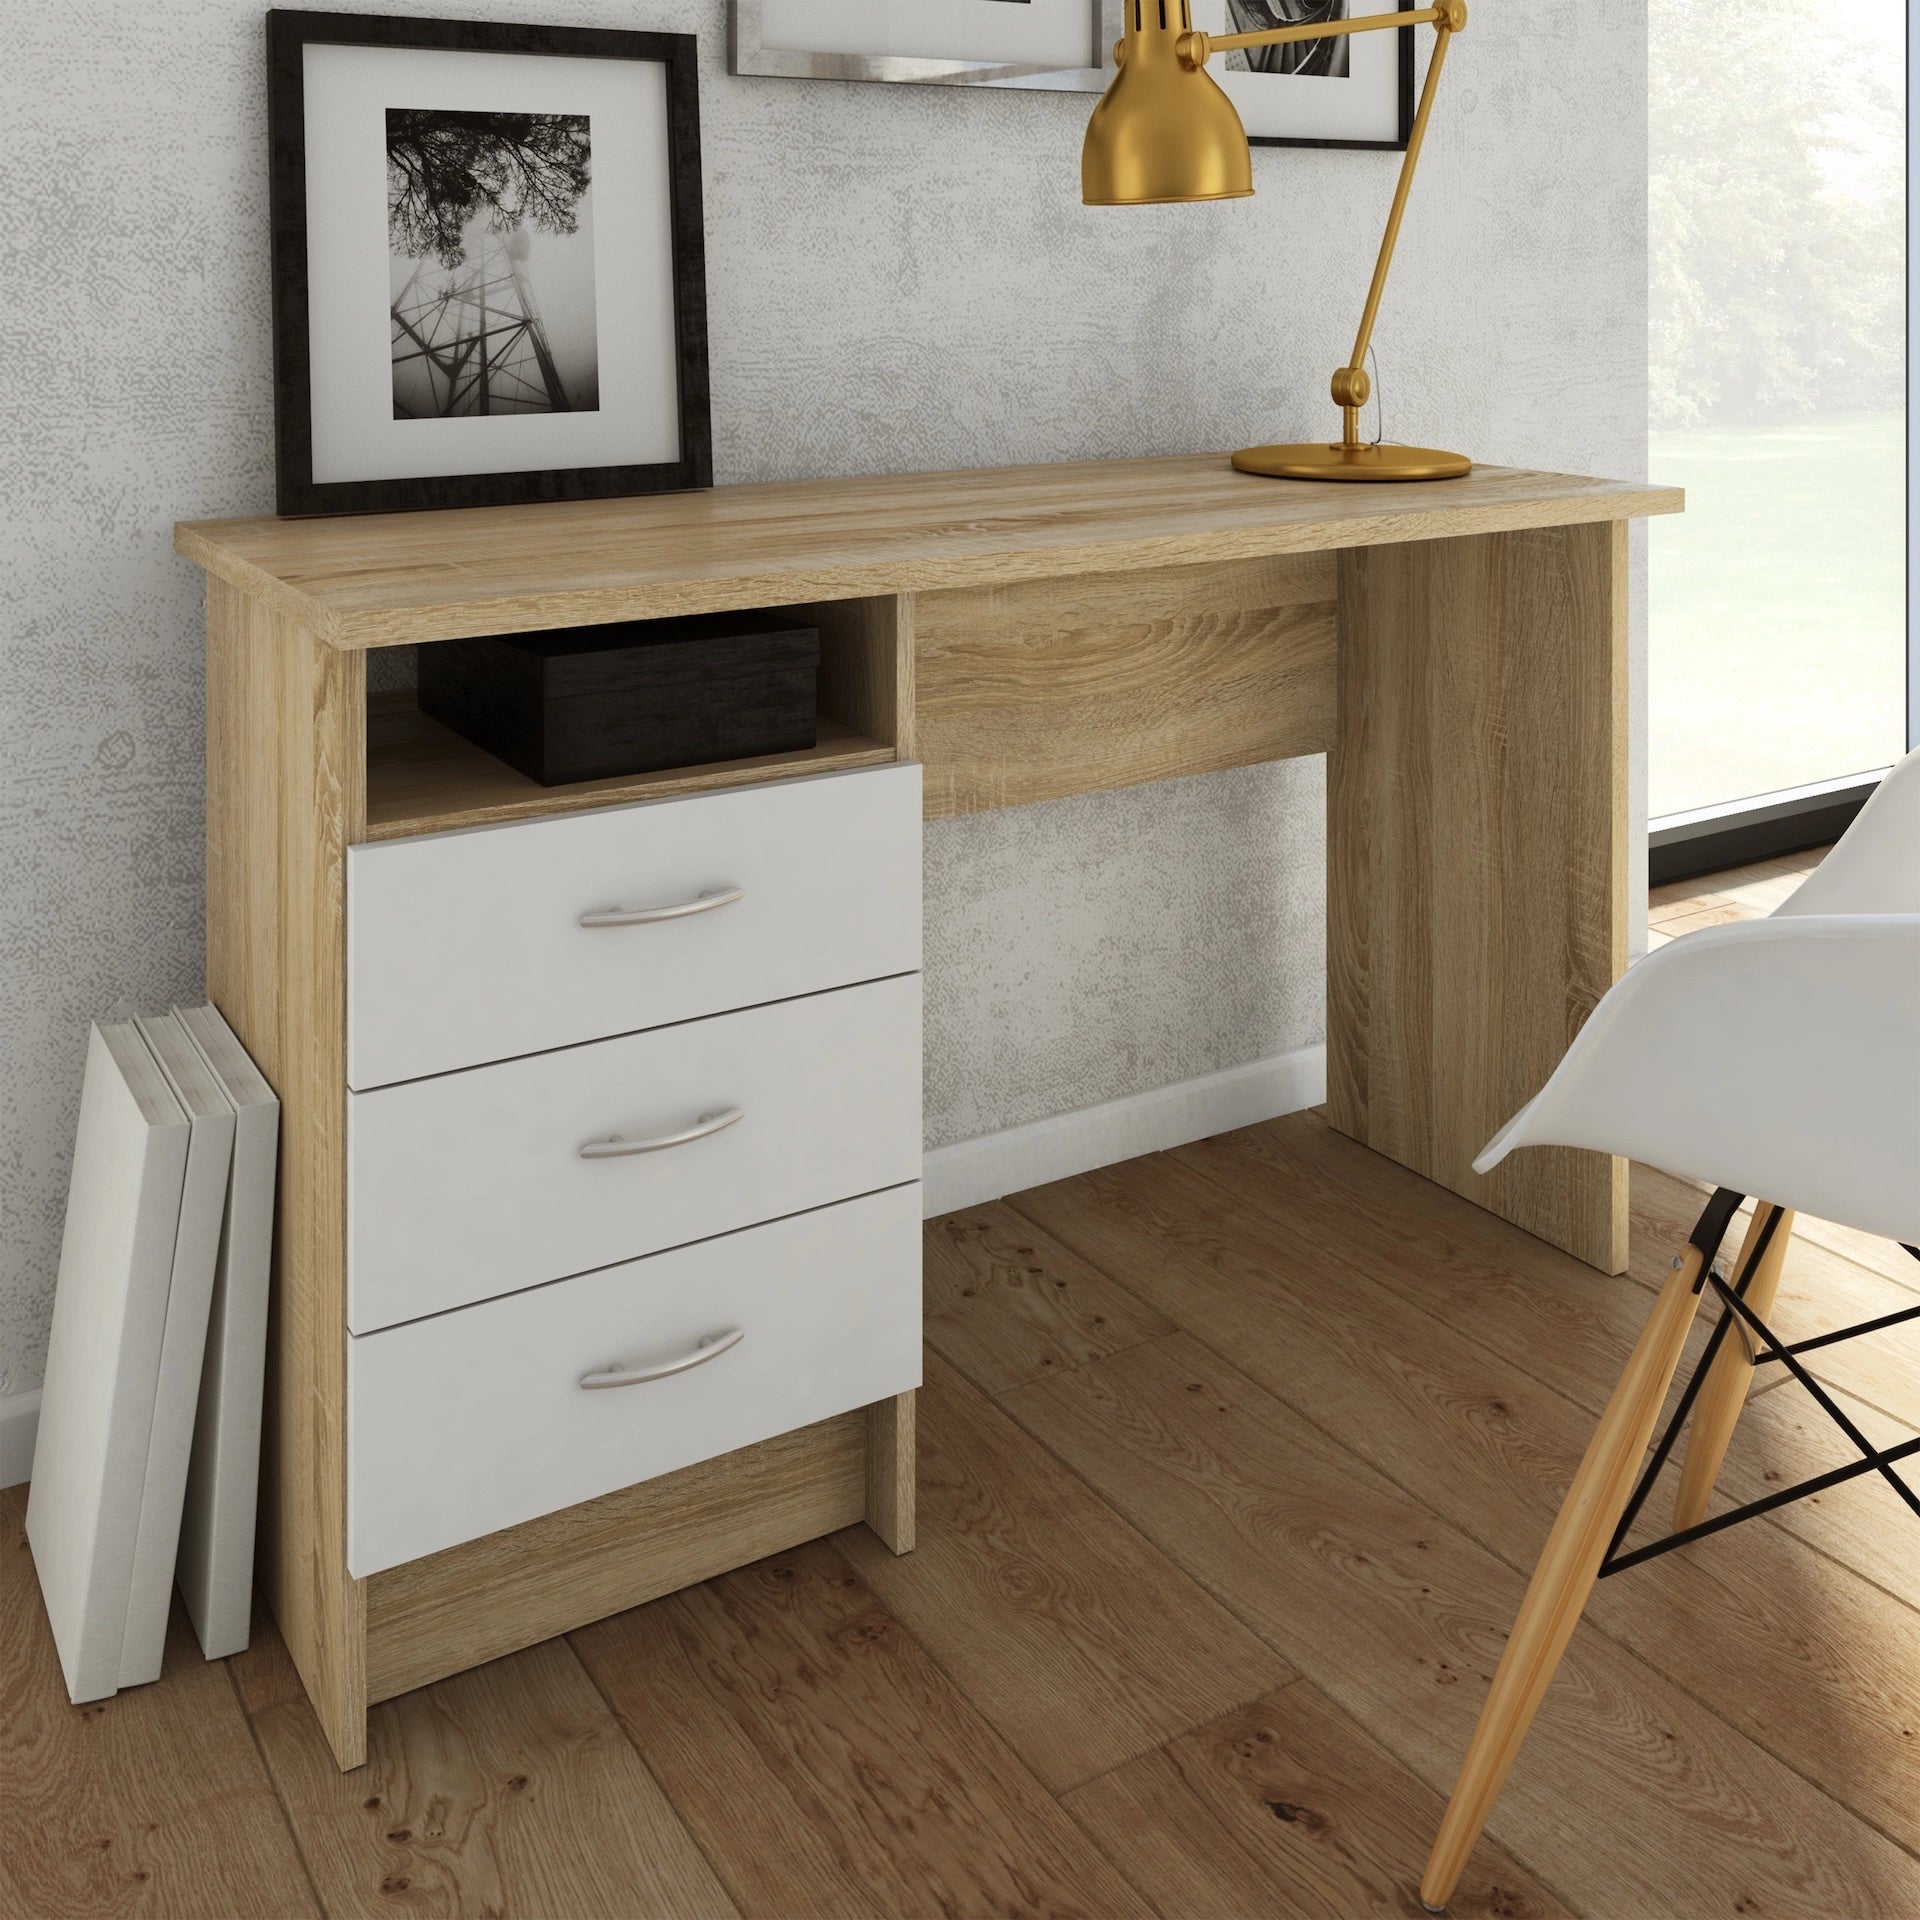 Furniture To Go Function Plus Oak Desk 3 White Drawers